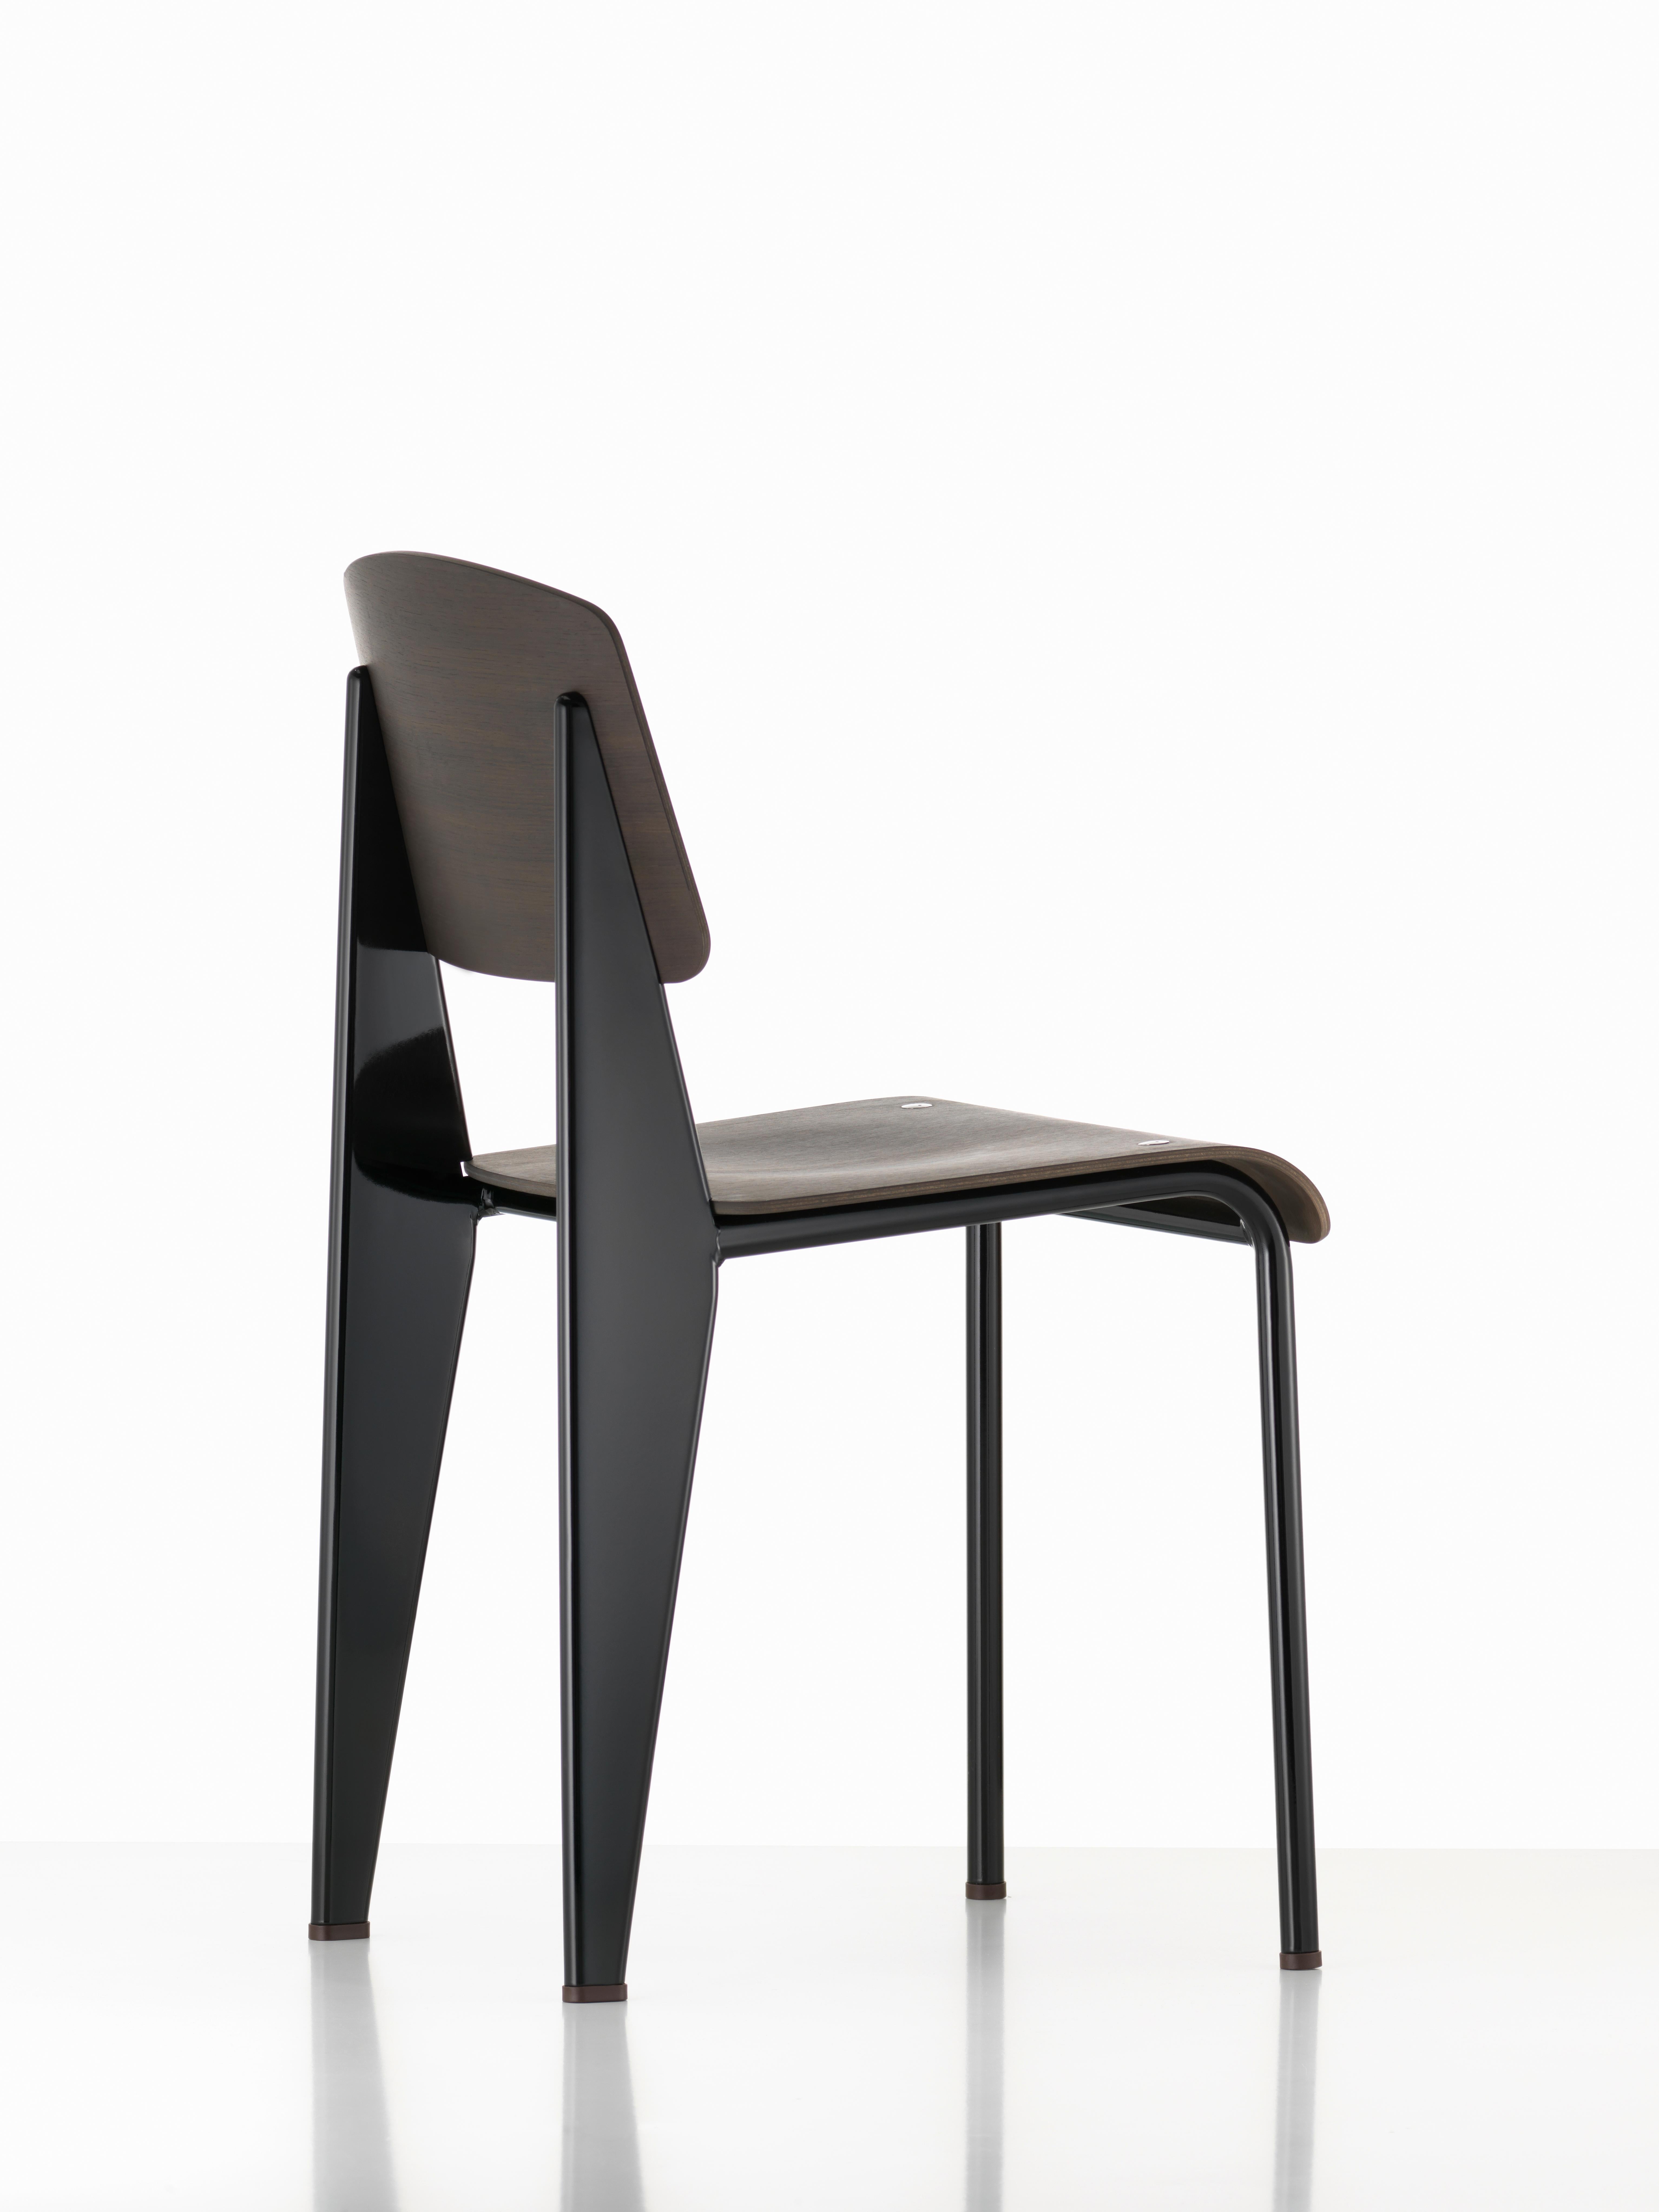 Jean Prouvé Standard Chair in Black Tinted Walnut and Black Metal for Vitra (Moderne der Mitte des Jahrhunderts)